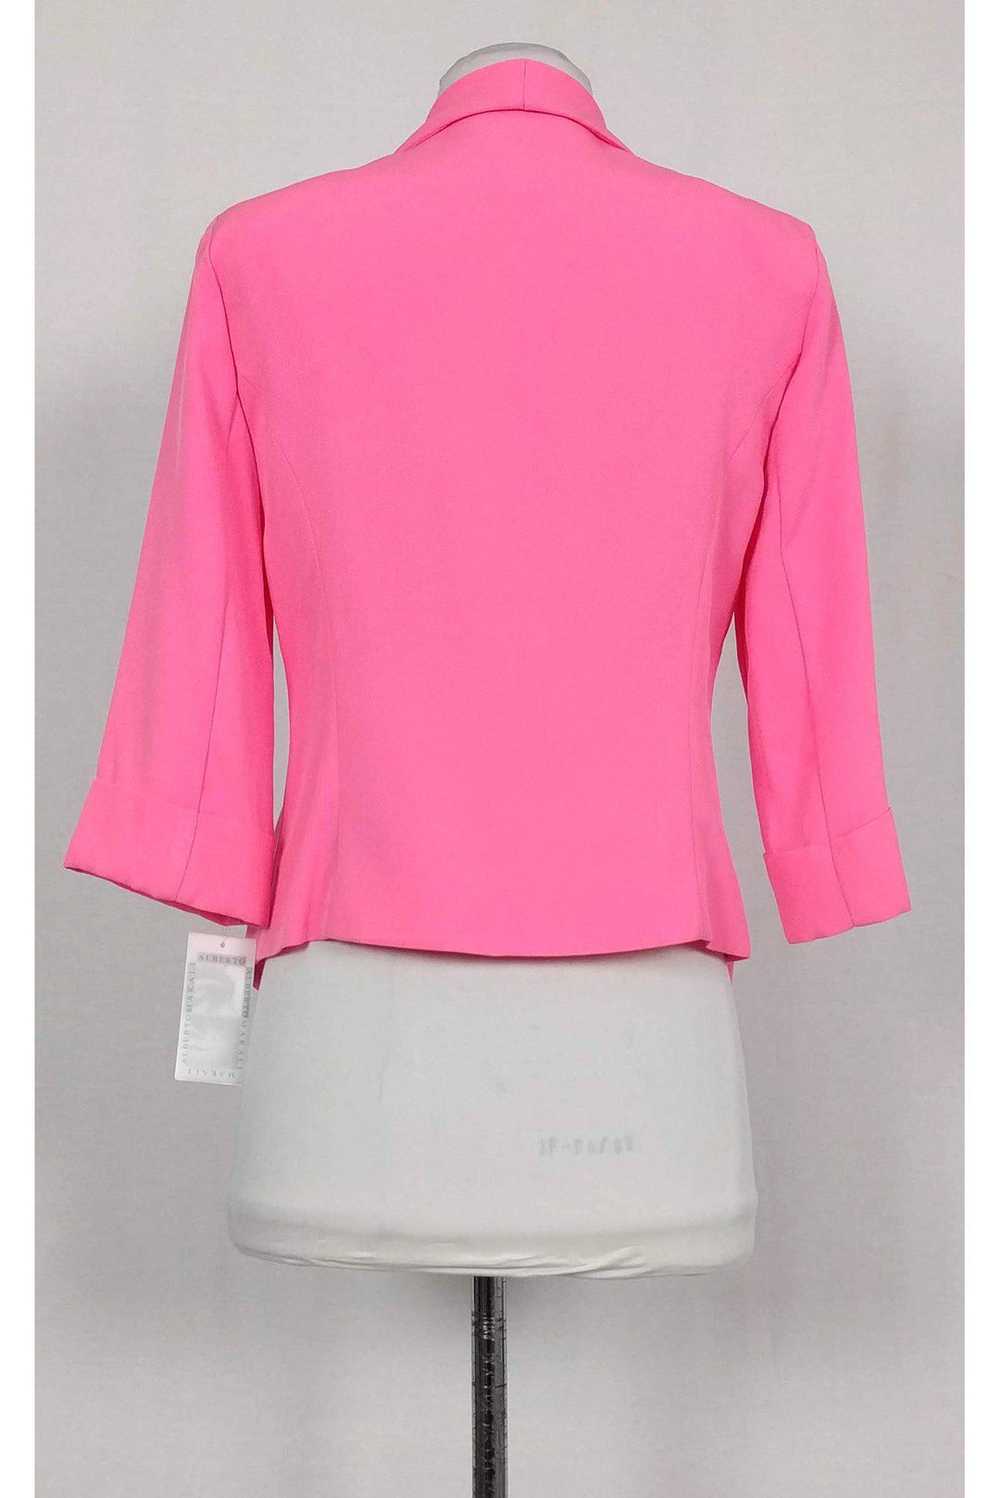 Alberto Makali - Neon Pink Asymmetrical Jacket Sz… - image 3